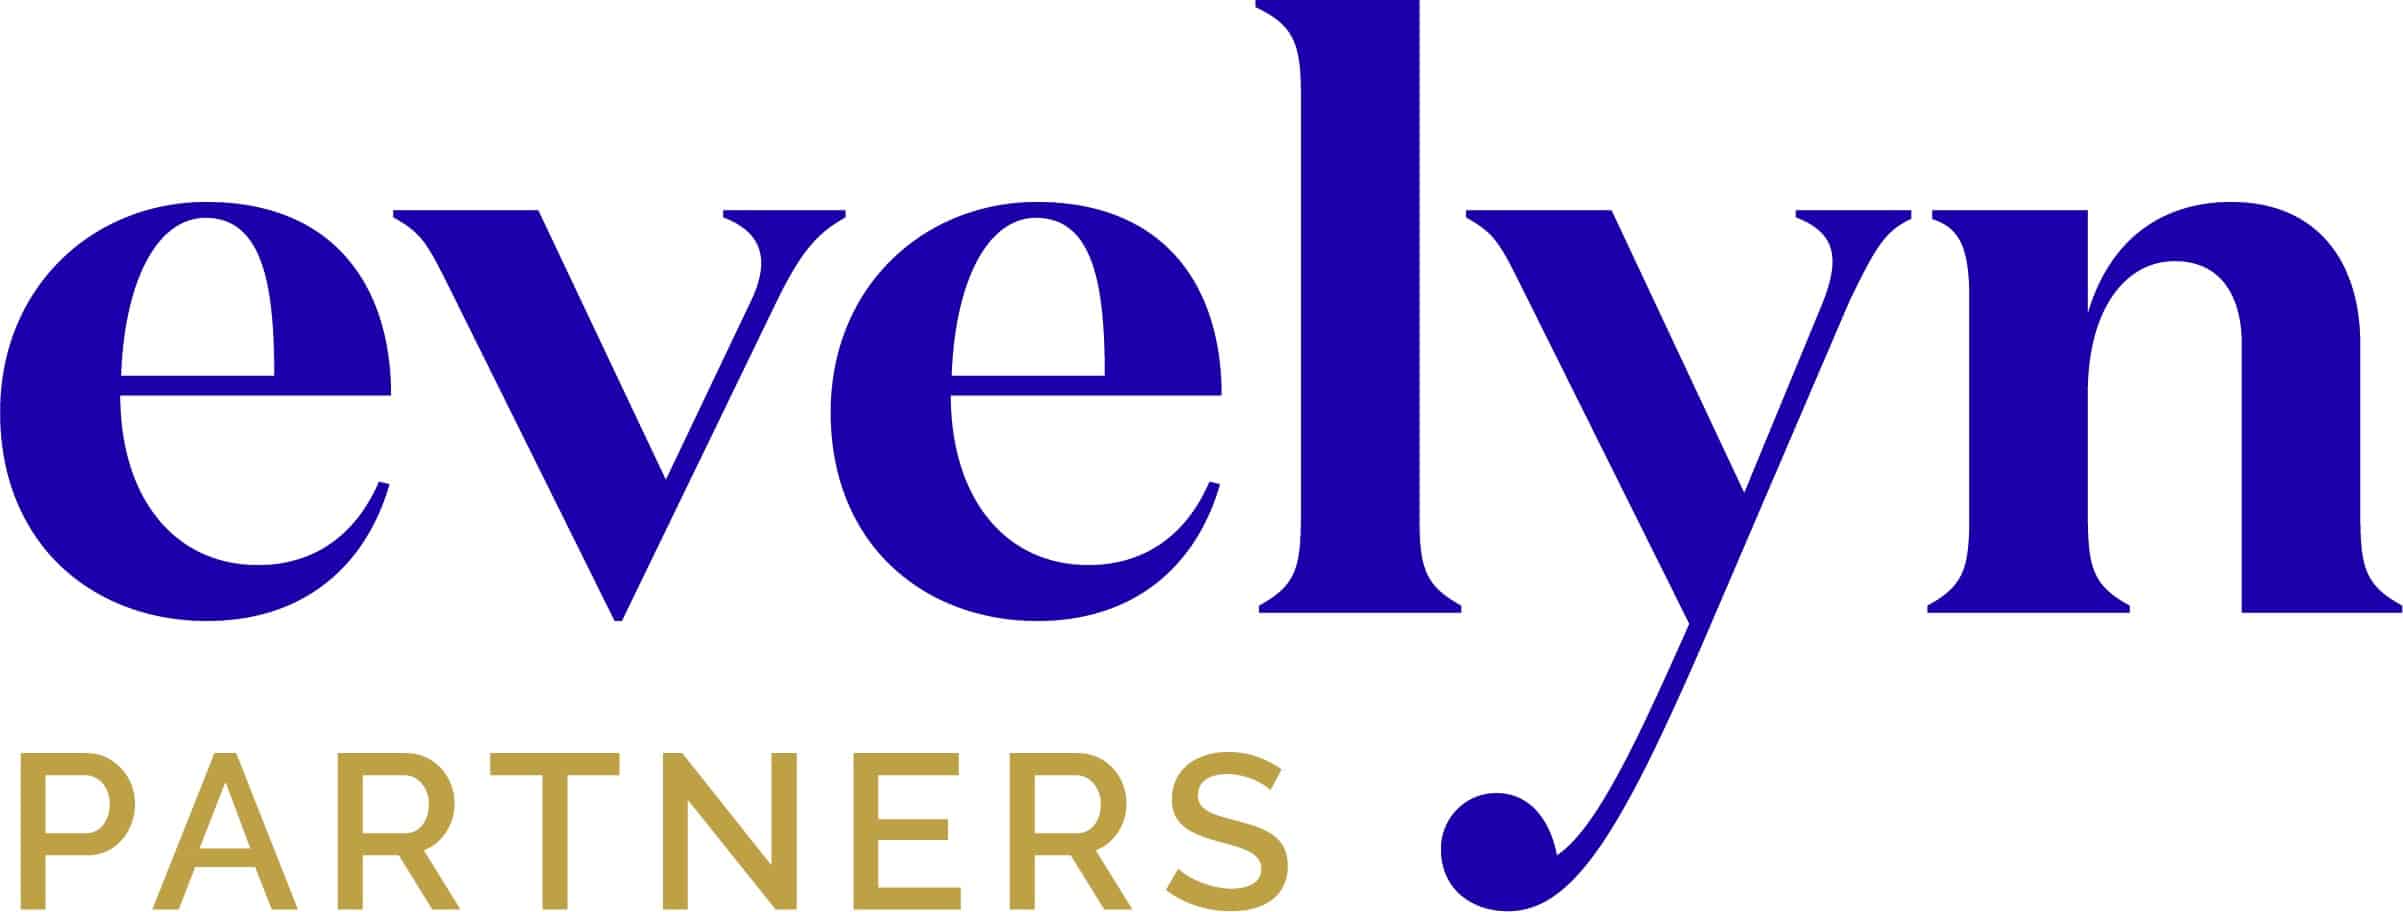 evelyn partners logo